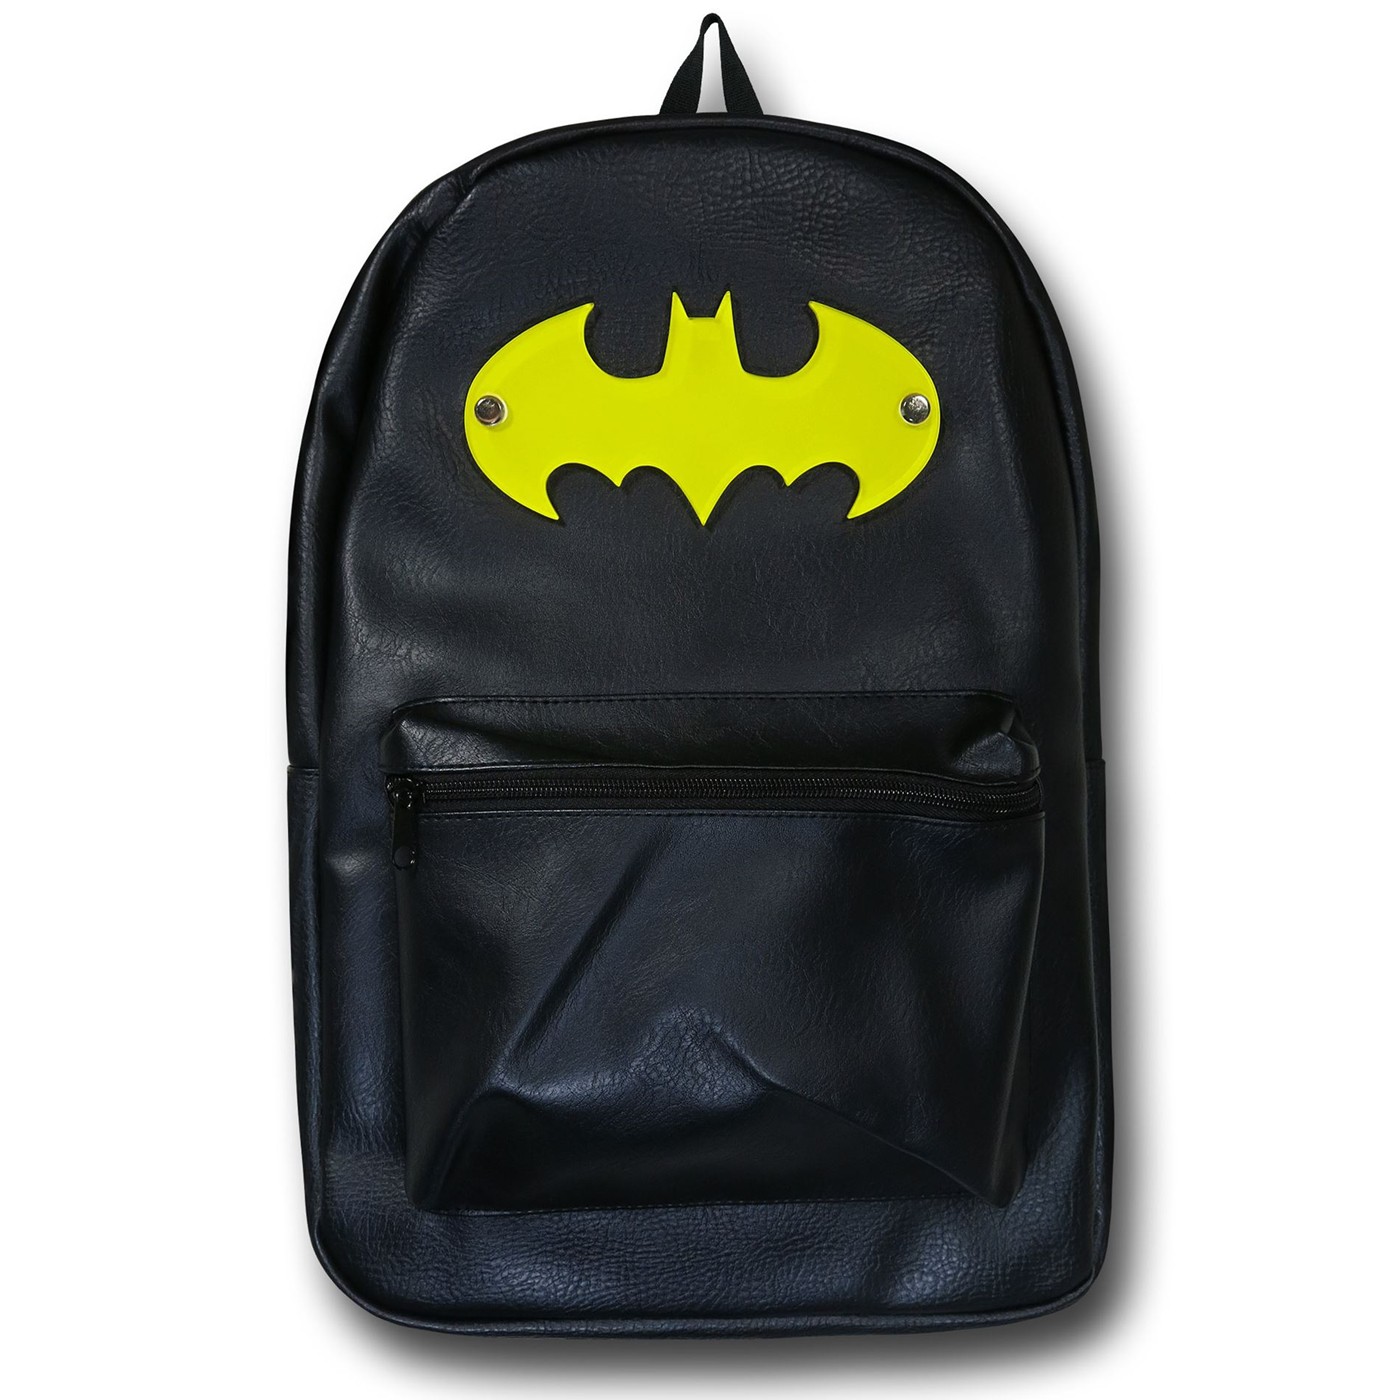 Batman Yellow Symbol Black Backpack